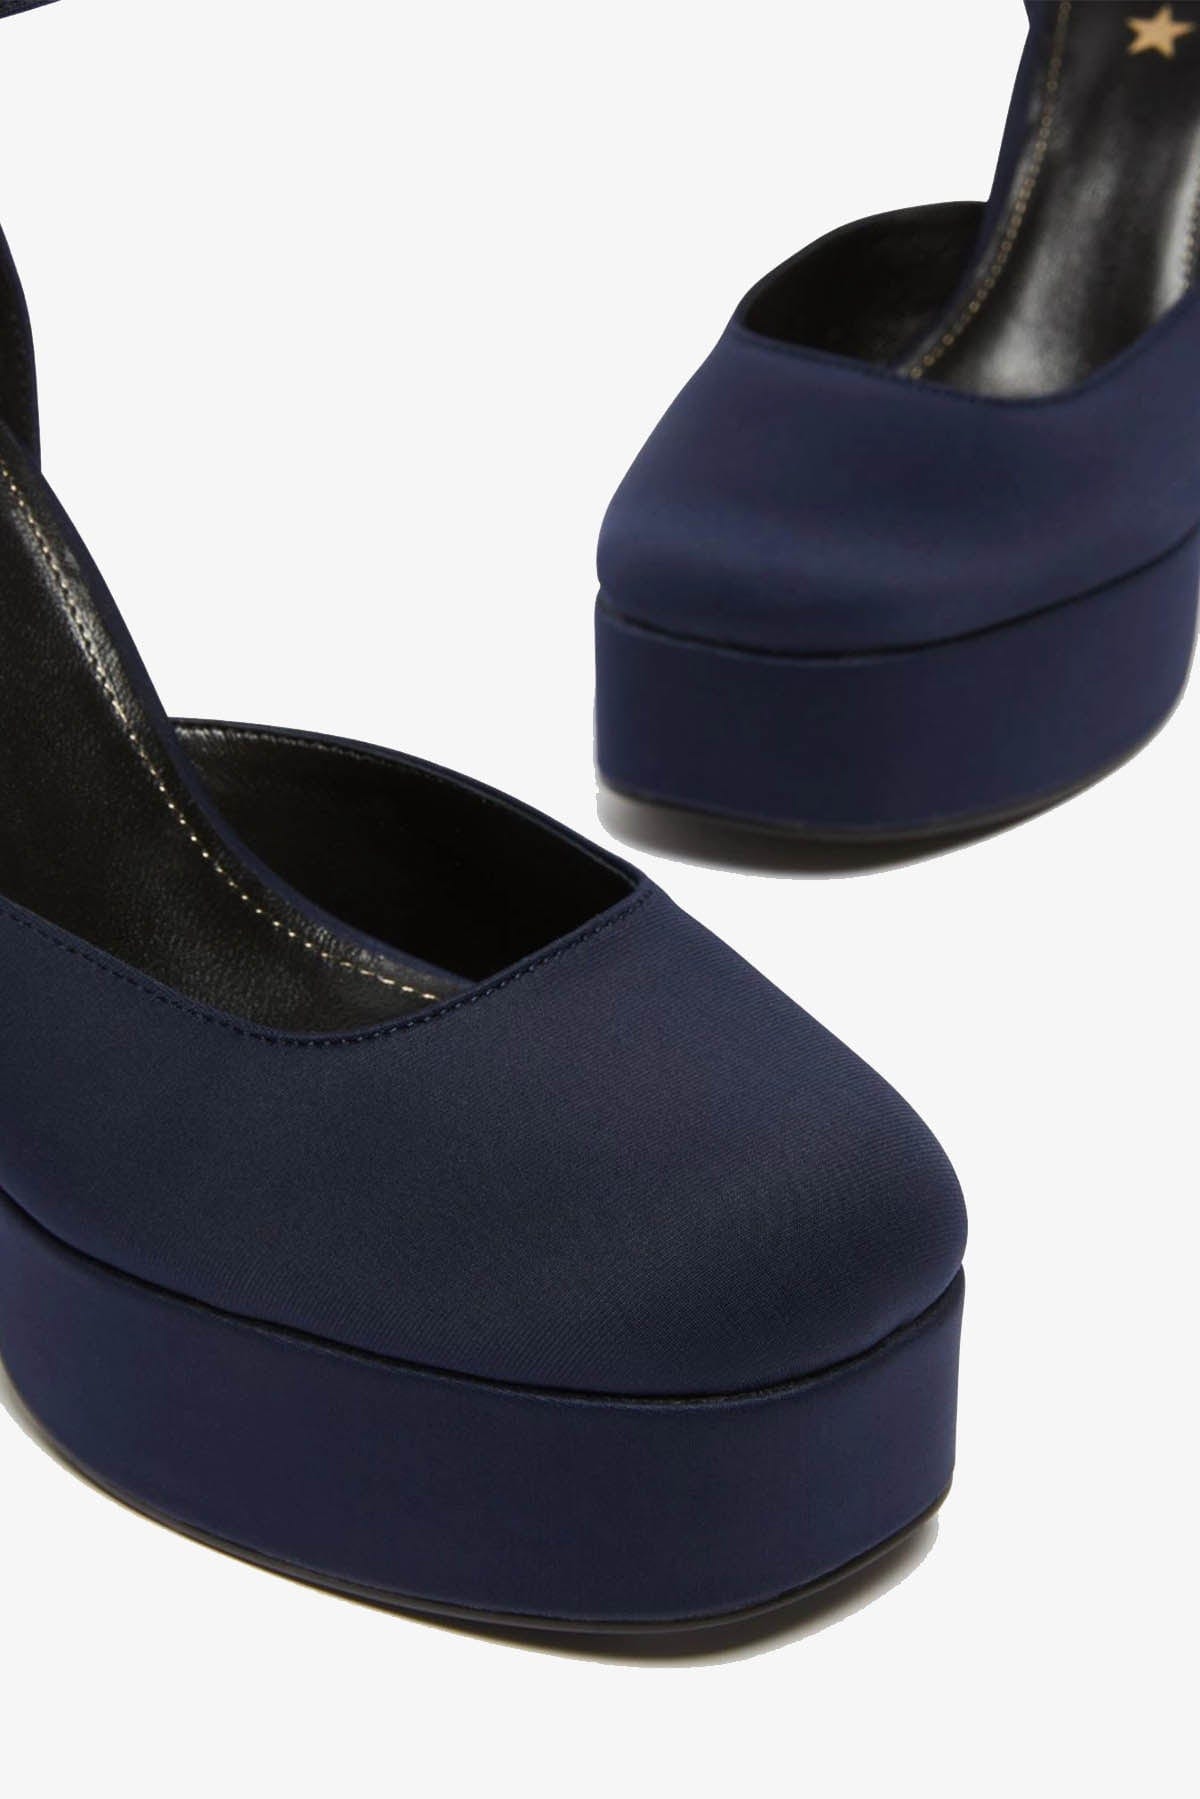 MARELLA CALZATURE  Platform Shoes Blu Marella Naval